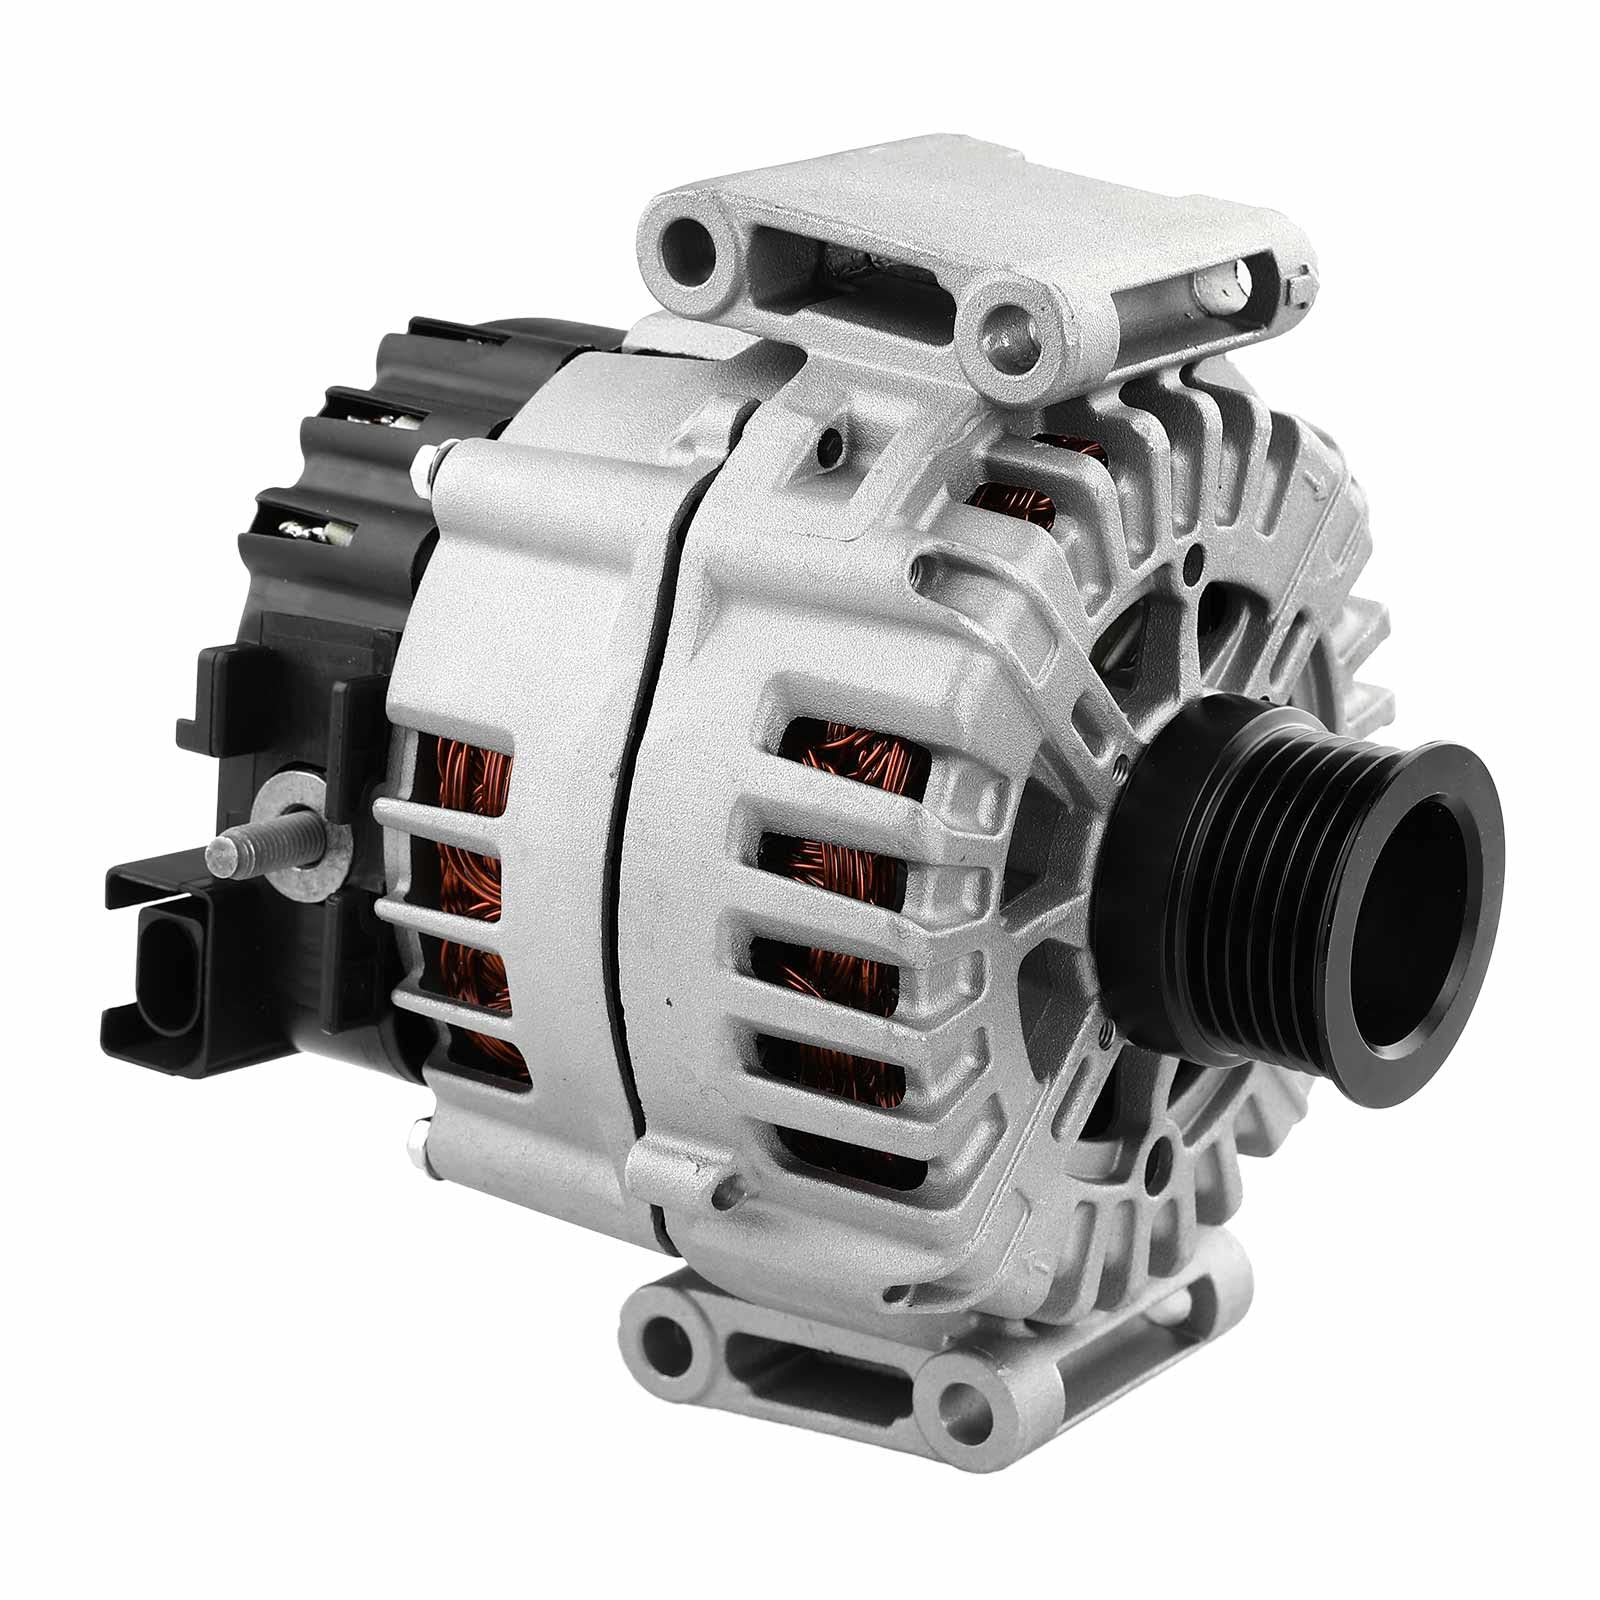 Frankberg Alternator Lichtmaschine Generator Kompatibel mit W204 C350 3.5L 2011-2014 C204 C350 E-Klasse W212 A207 C207 S212 E300 E350 X204 350 W221 S350 Replace# 0141544202 von Frankberg